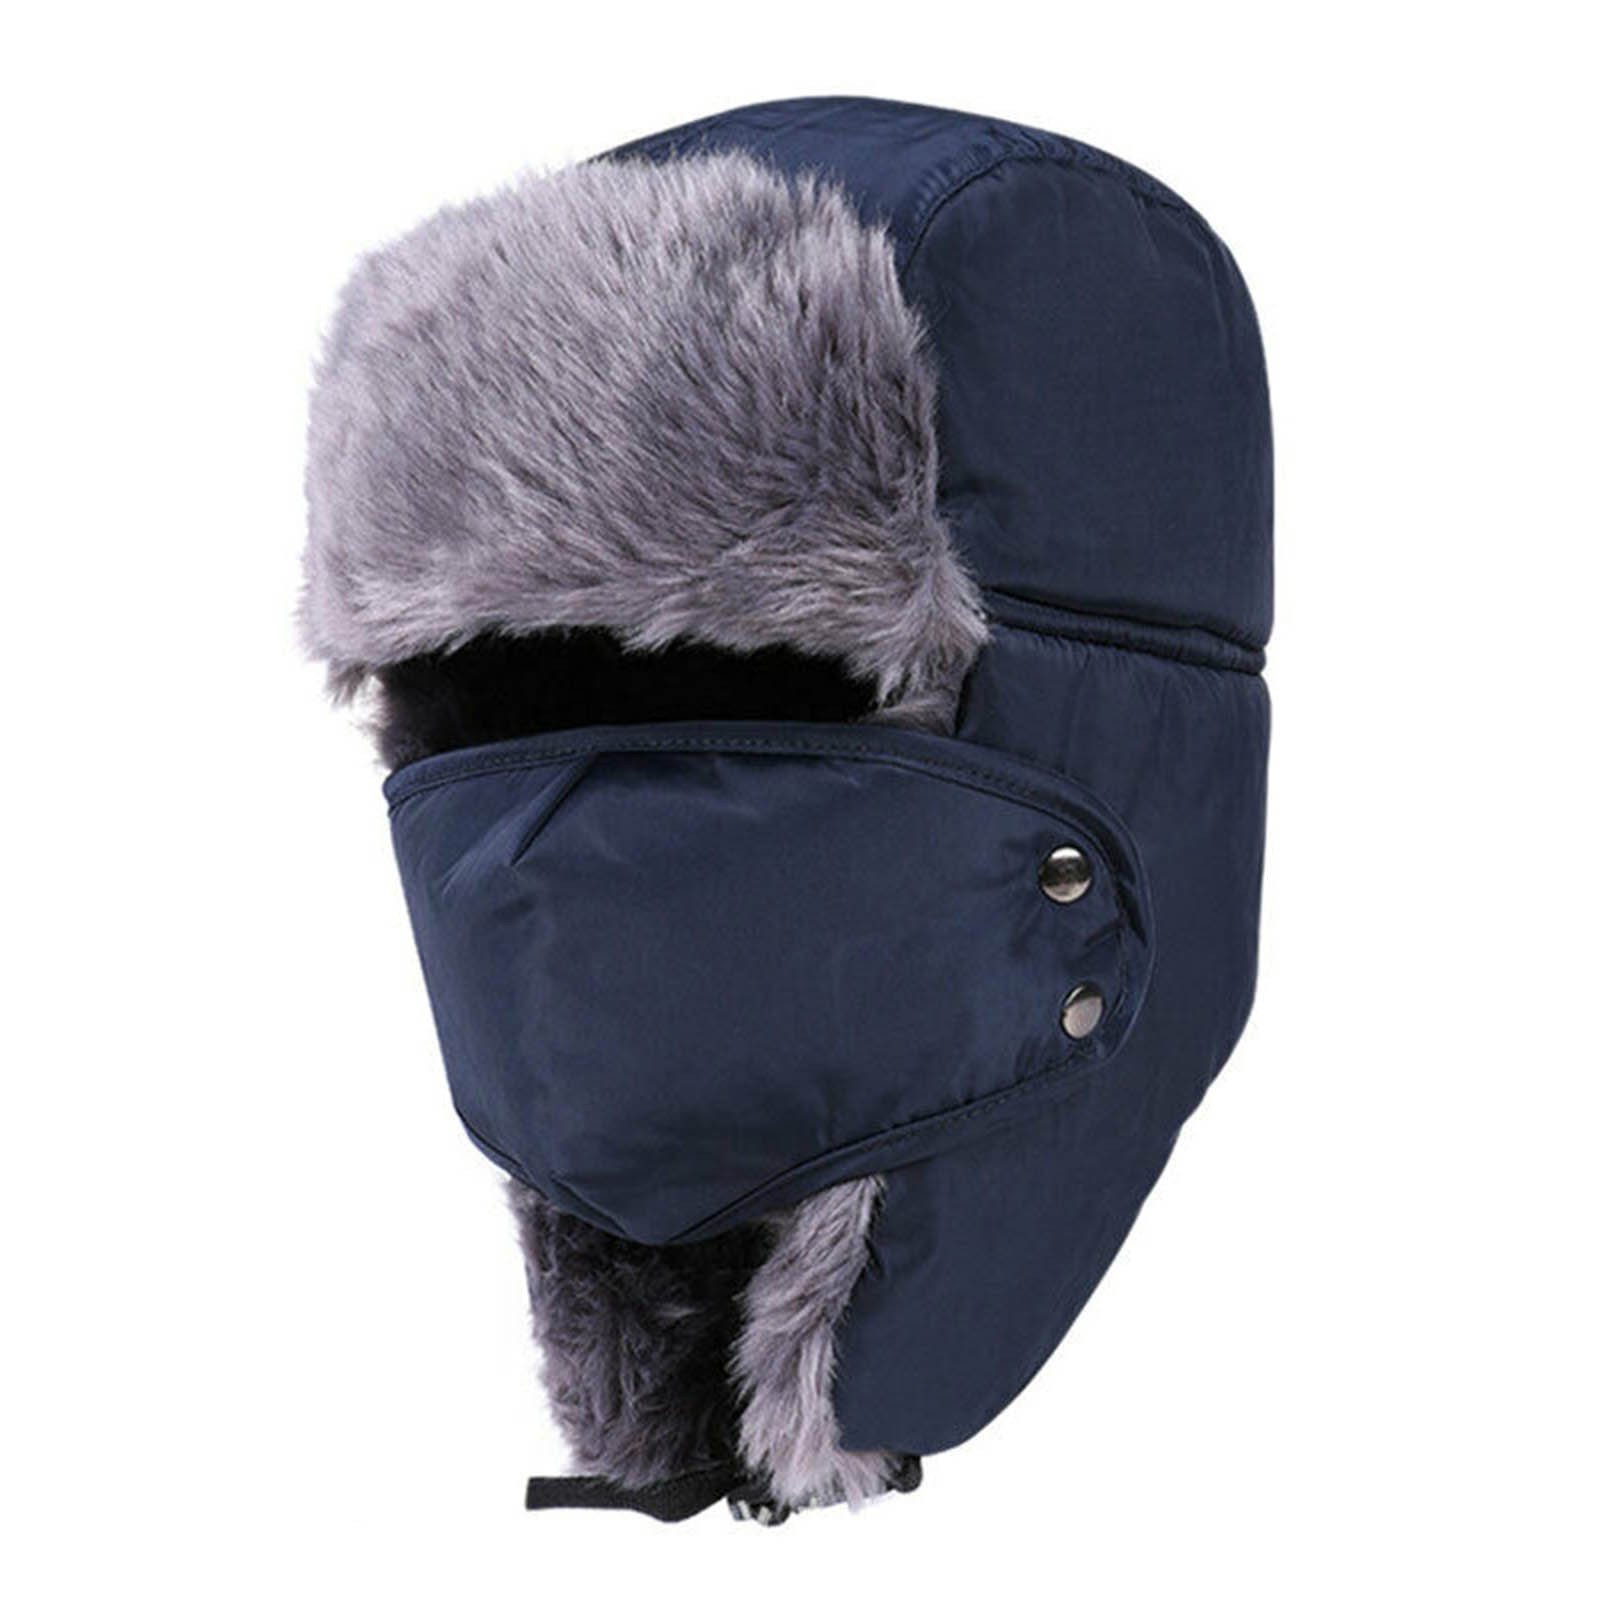 Fleecemütze Ohr Winddicht Kappe Blusmart Plüsch Warme Winter Hüte grau Kälte-Proof Outdoor